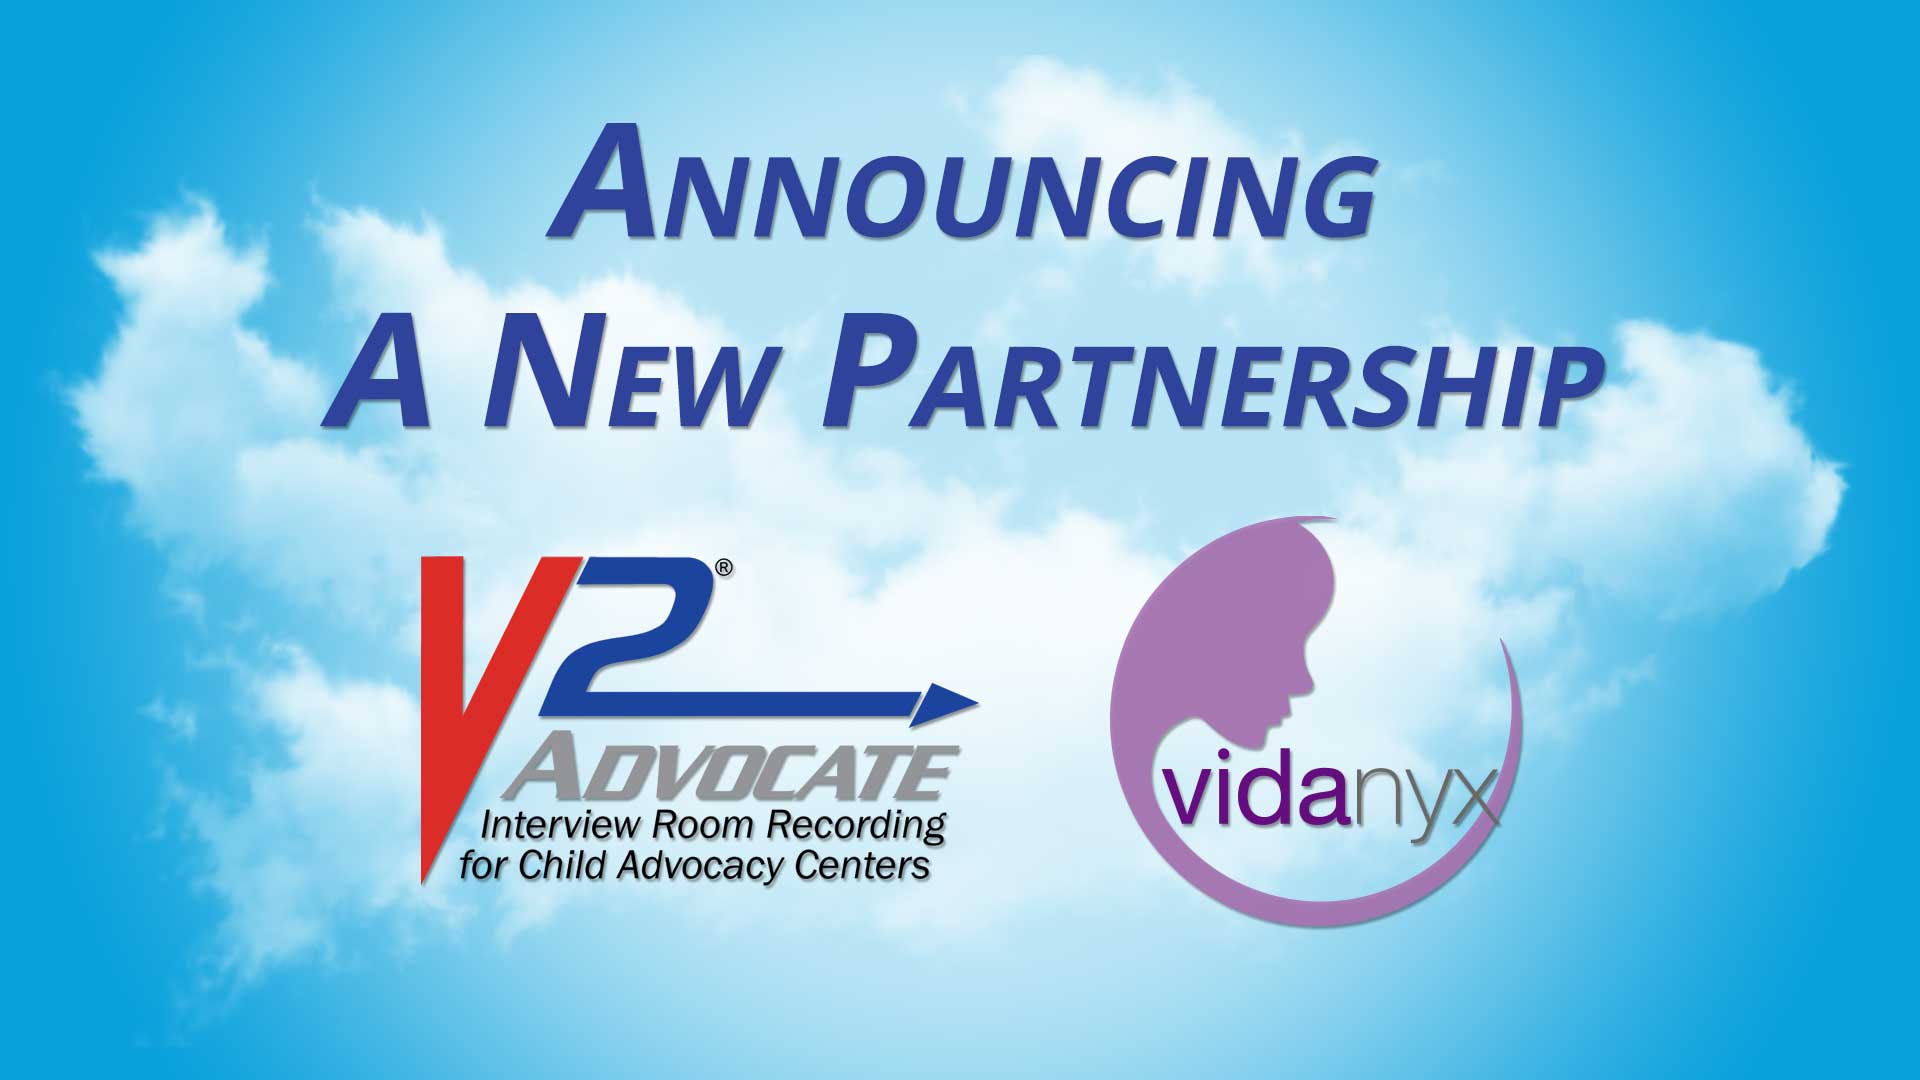 V2 Advocate Vidanyx Partnership